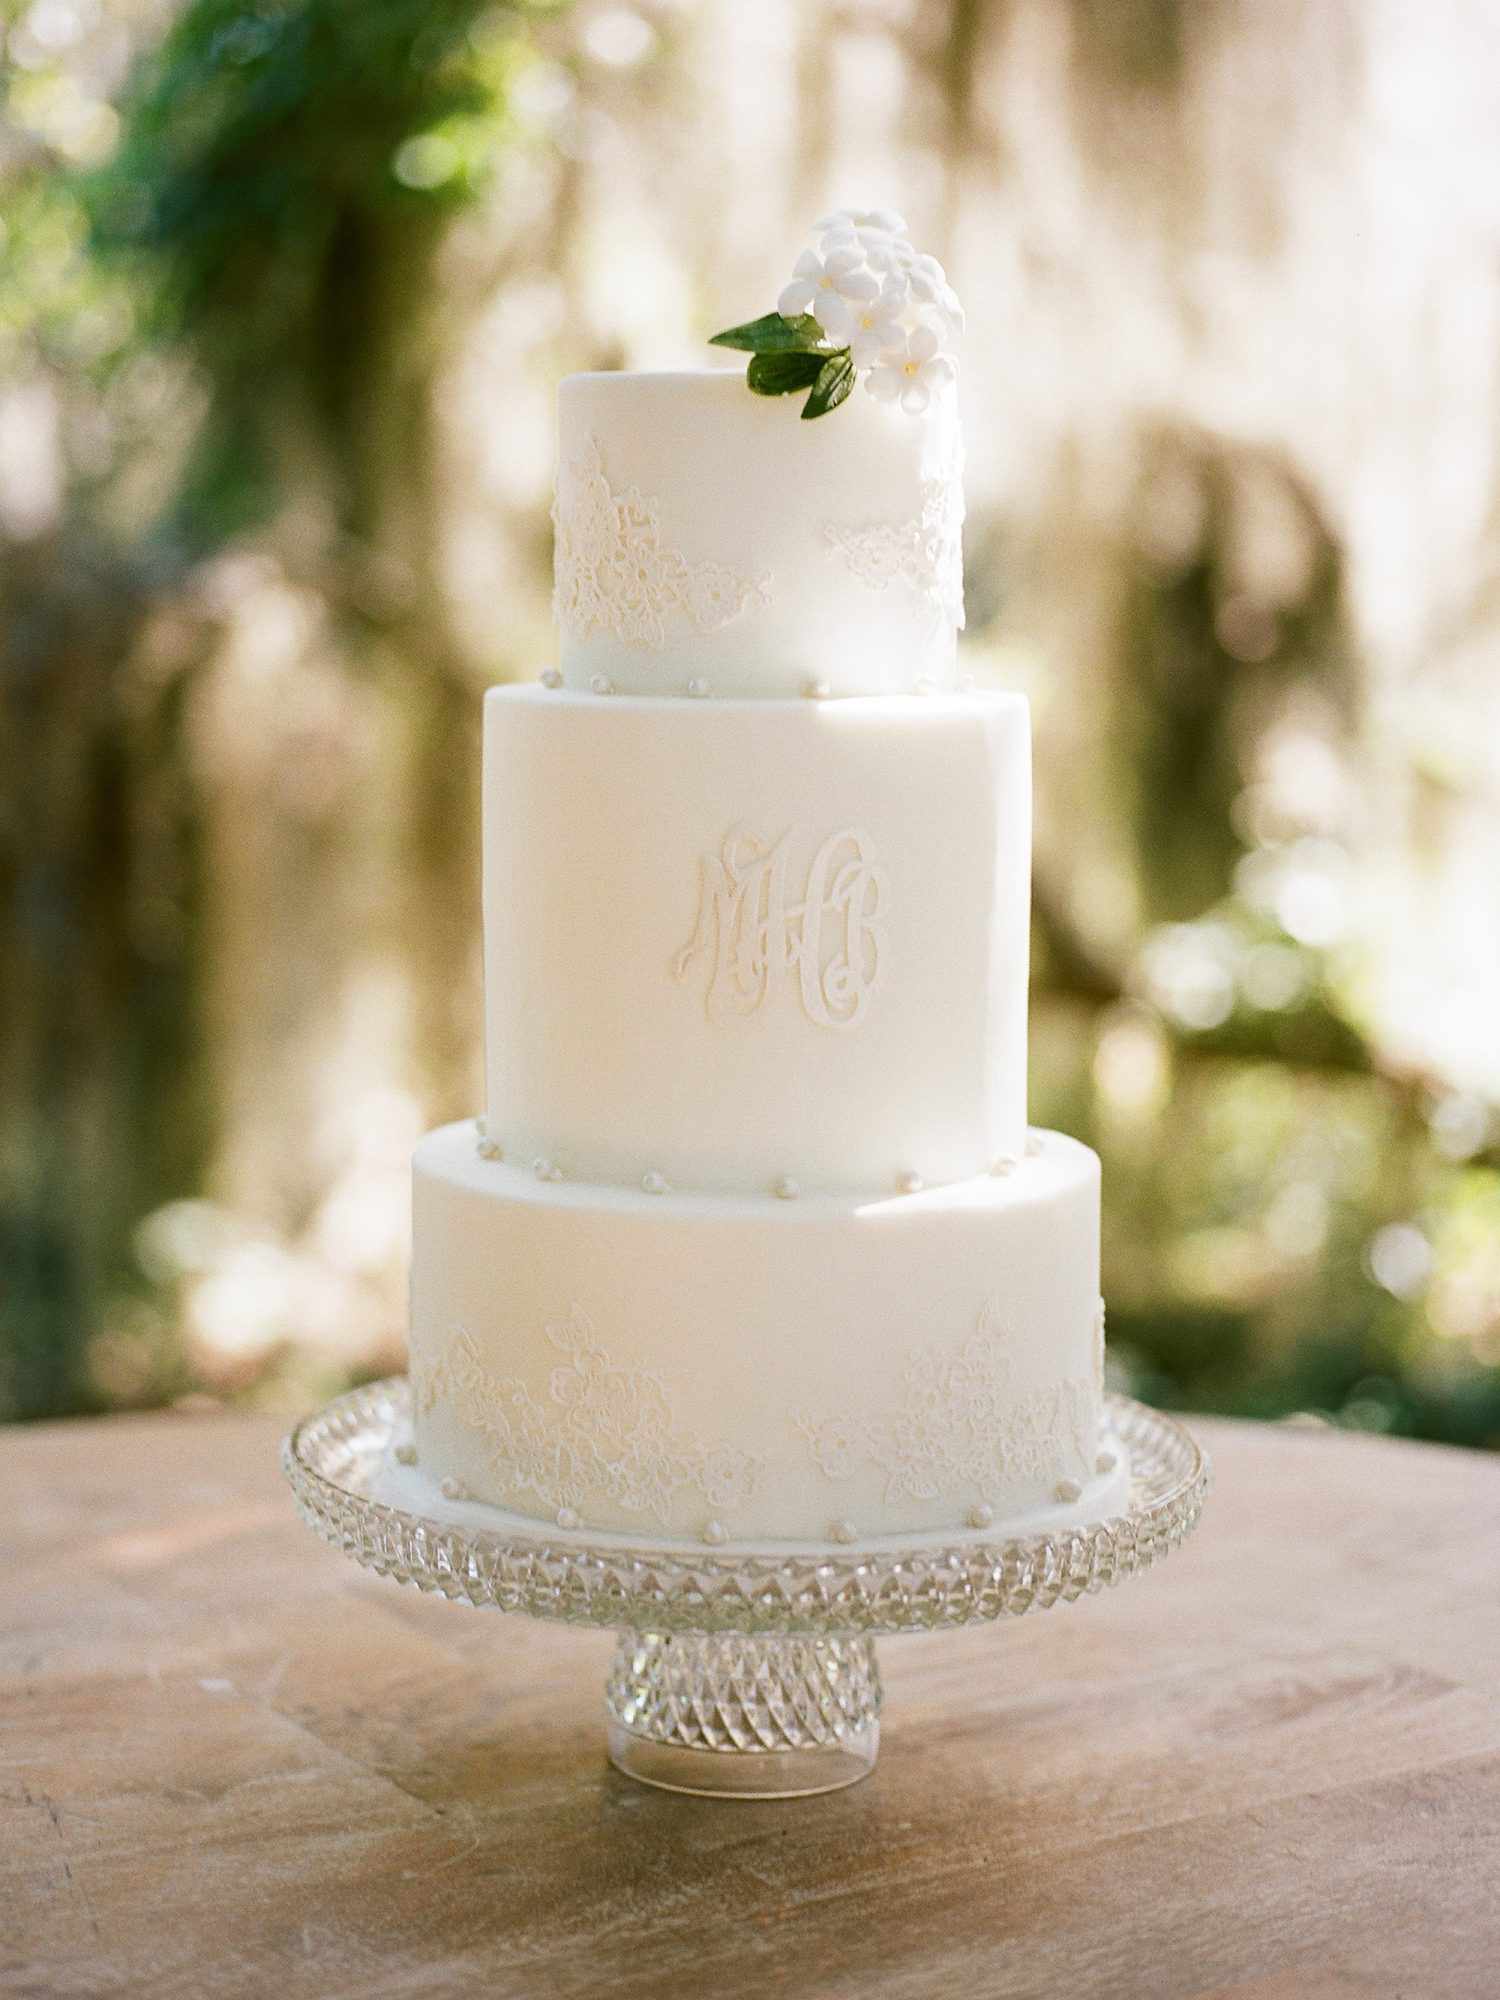 monogram wedding cake davy whitener minette rushing